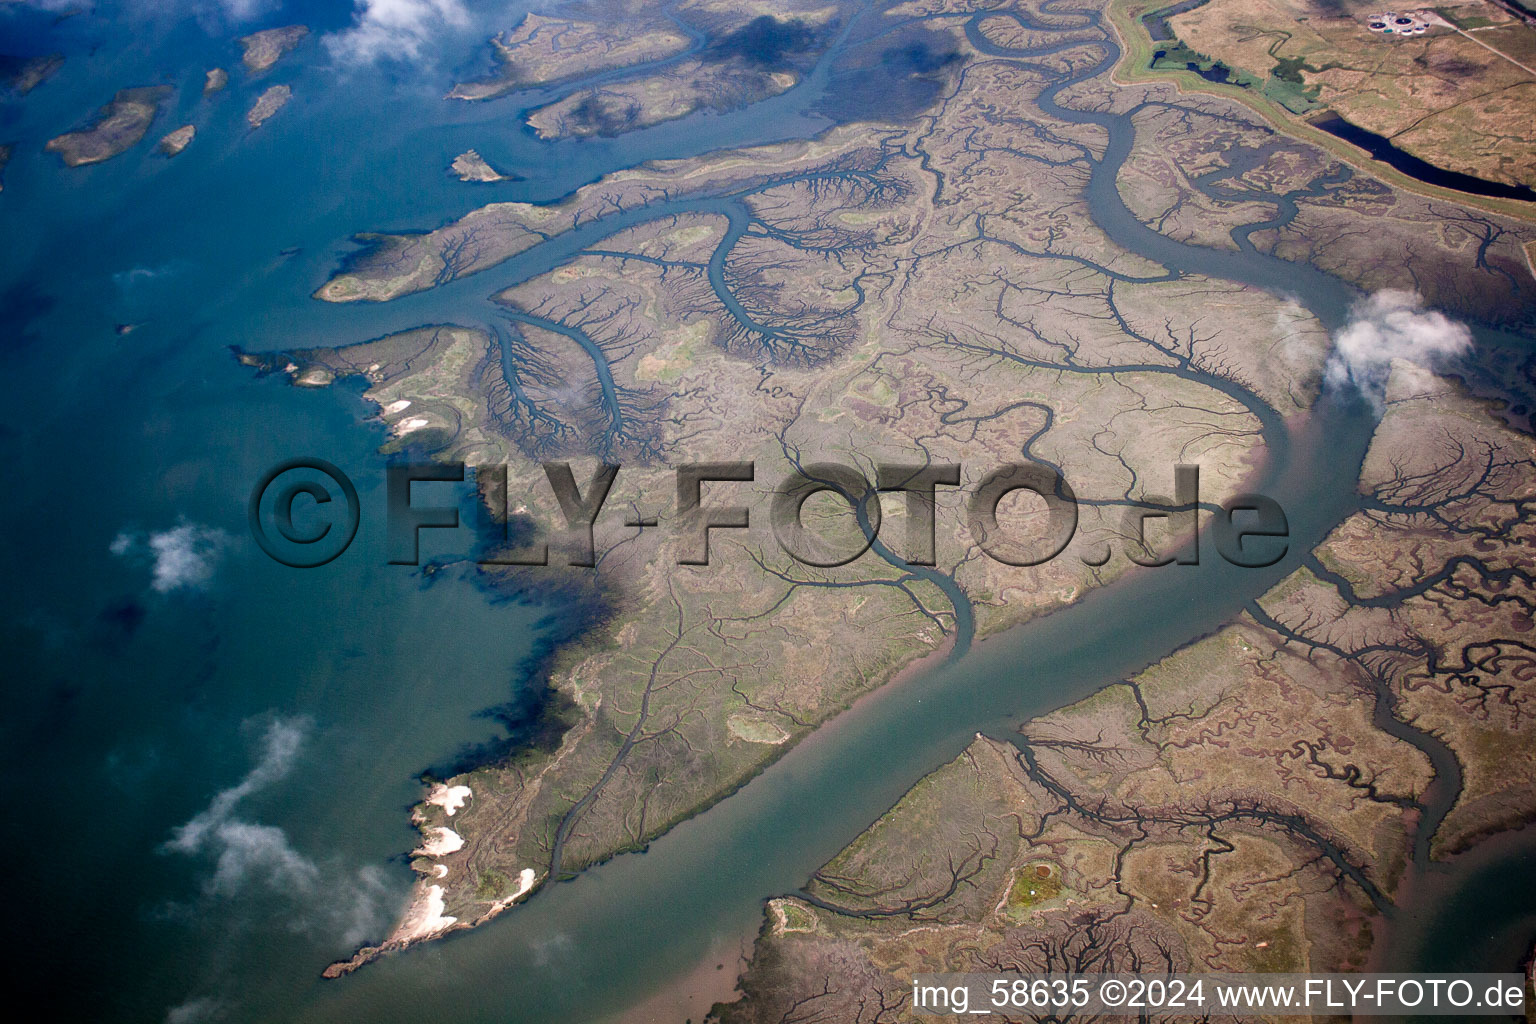 River Delta and estuary Thames in Isle of Grain in England, United Kingdom